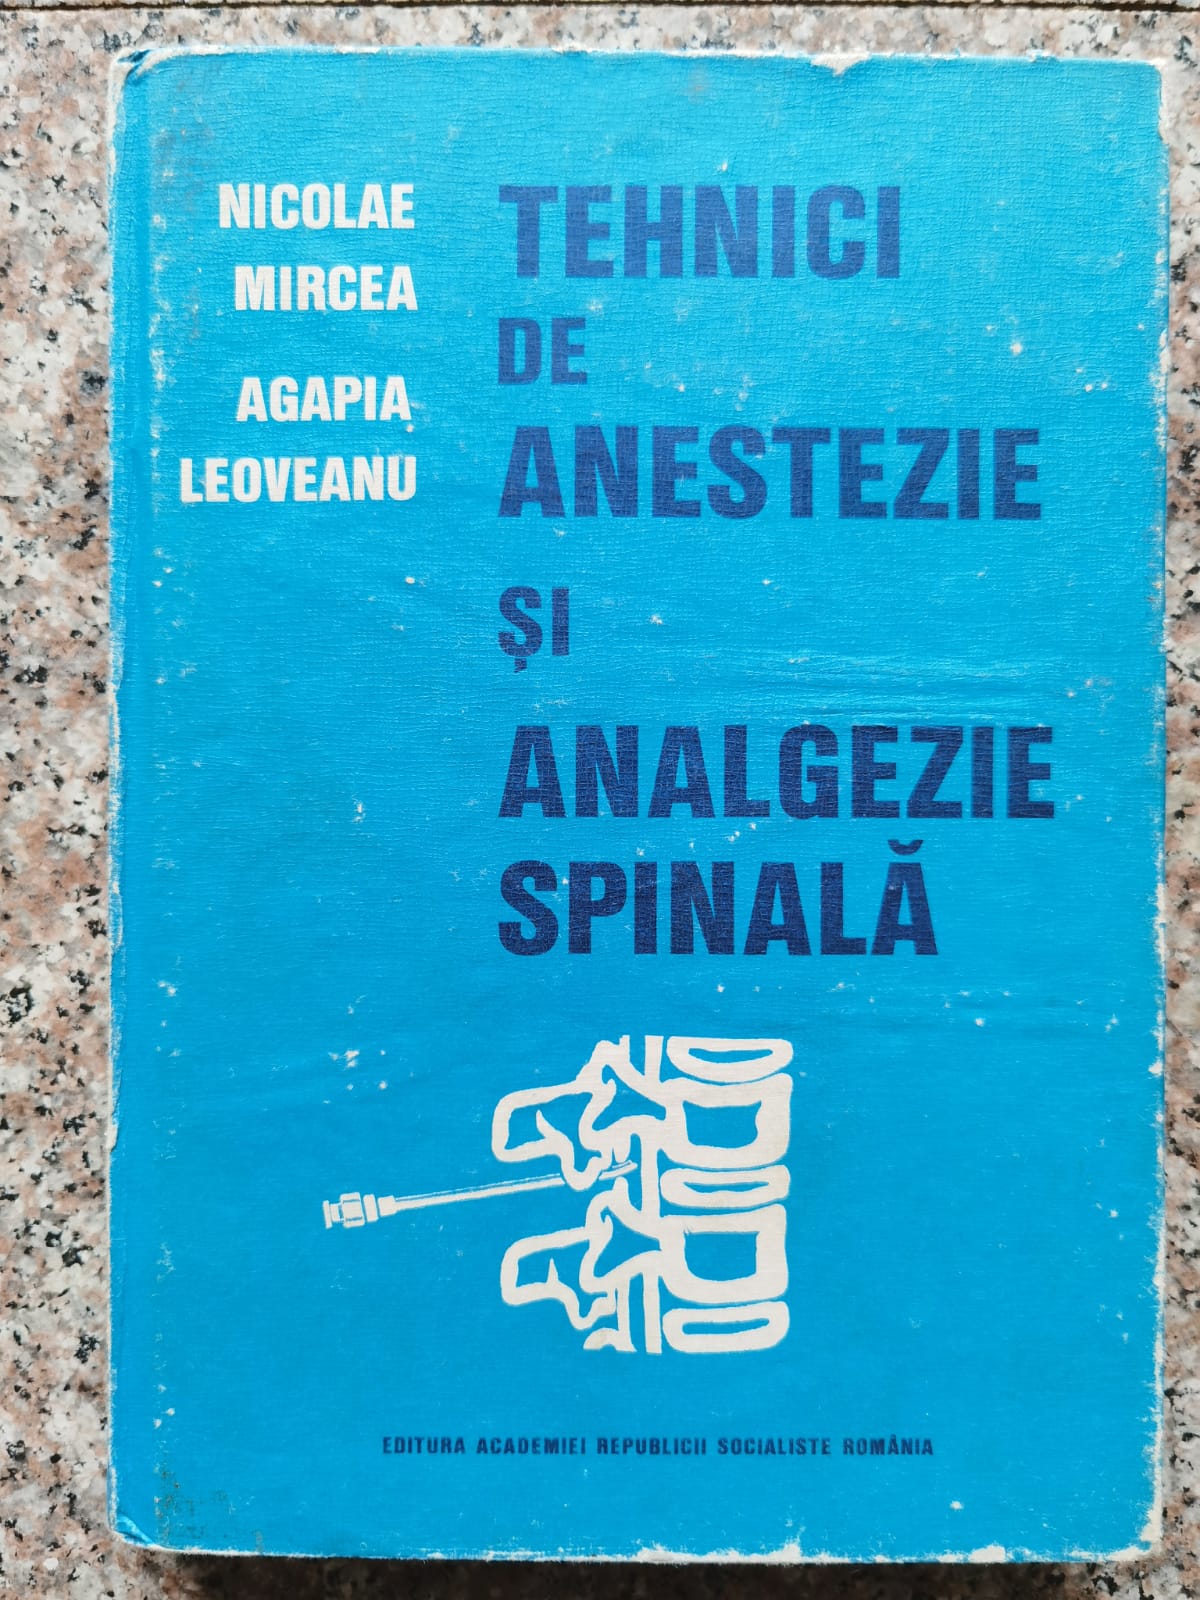 tehnici de anestezie si analgezie spinala                                                            n. mircea agapia leoveanu                                                                           